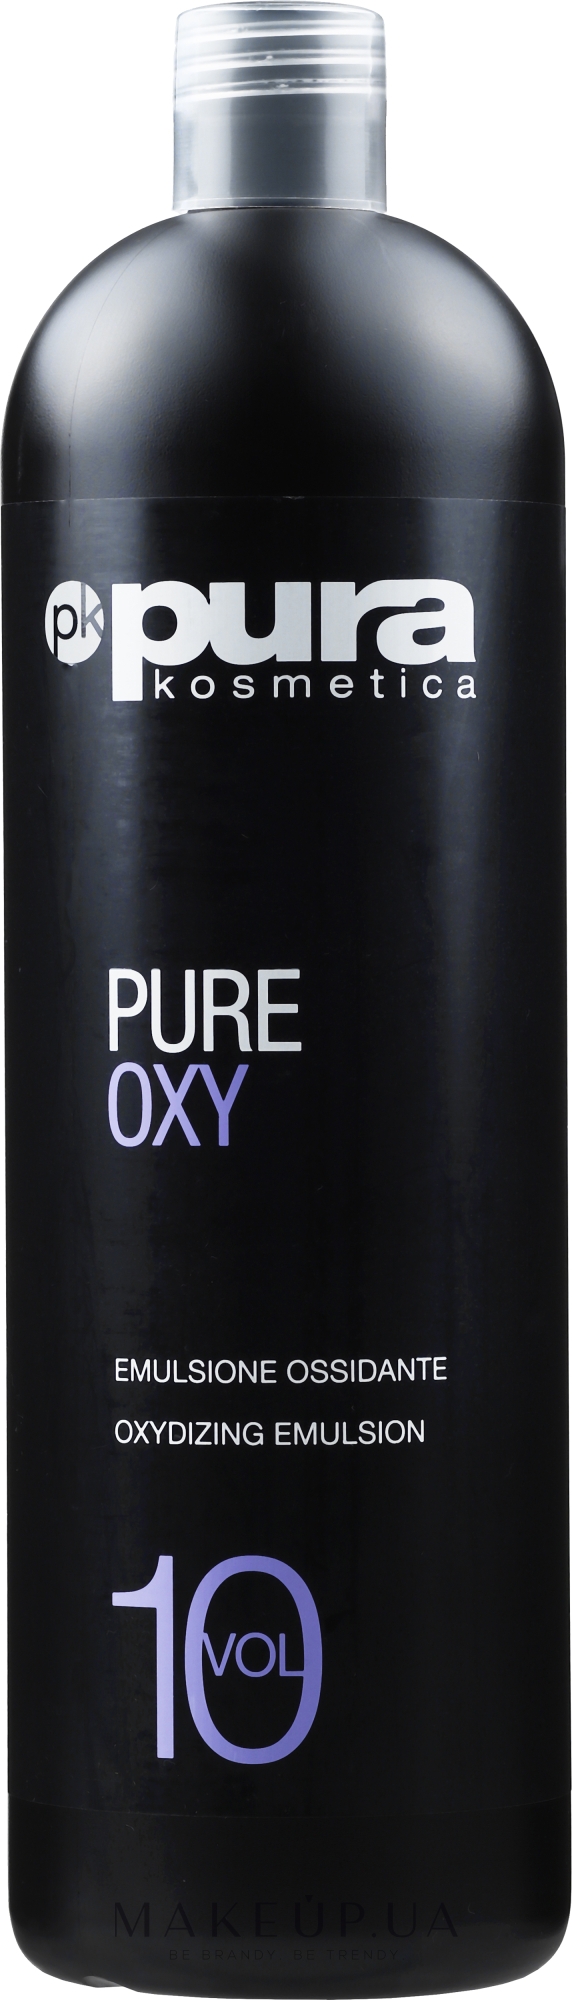 Окислитель для краски 3% - Pura Kosmetica Pure Oxy 10 Vol — фото 1000ml